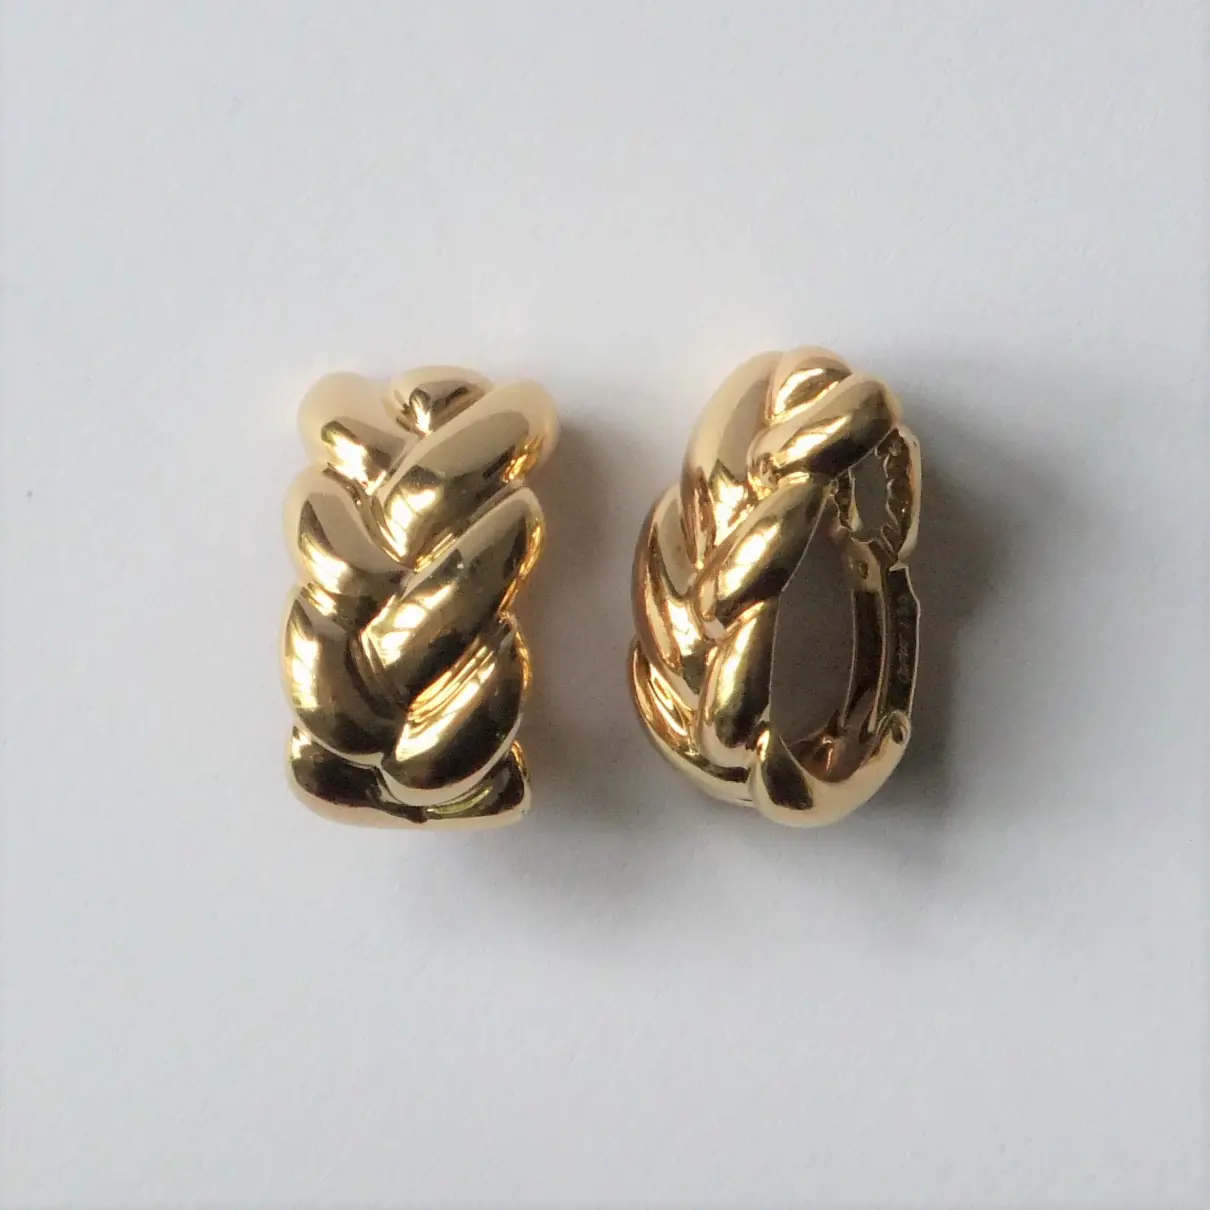 Buy Cartier Yellow gold earrings online - Vintage